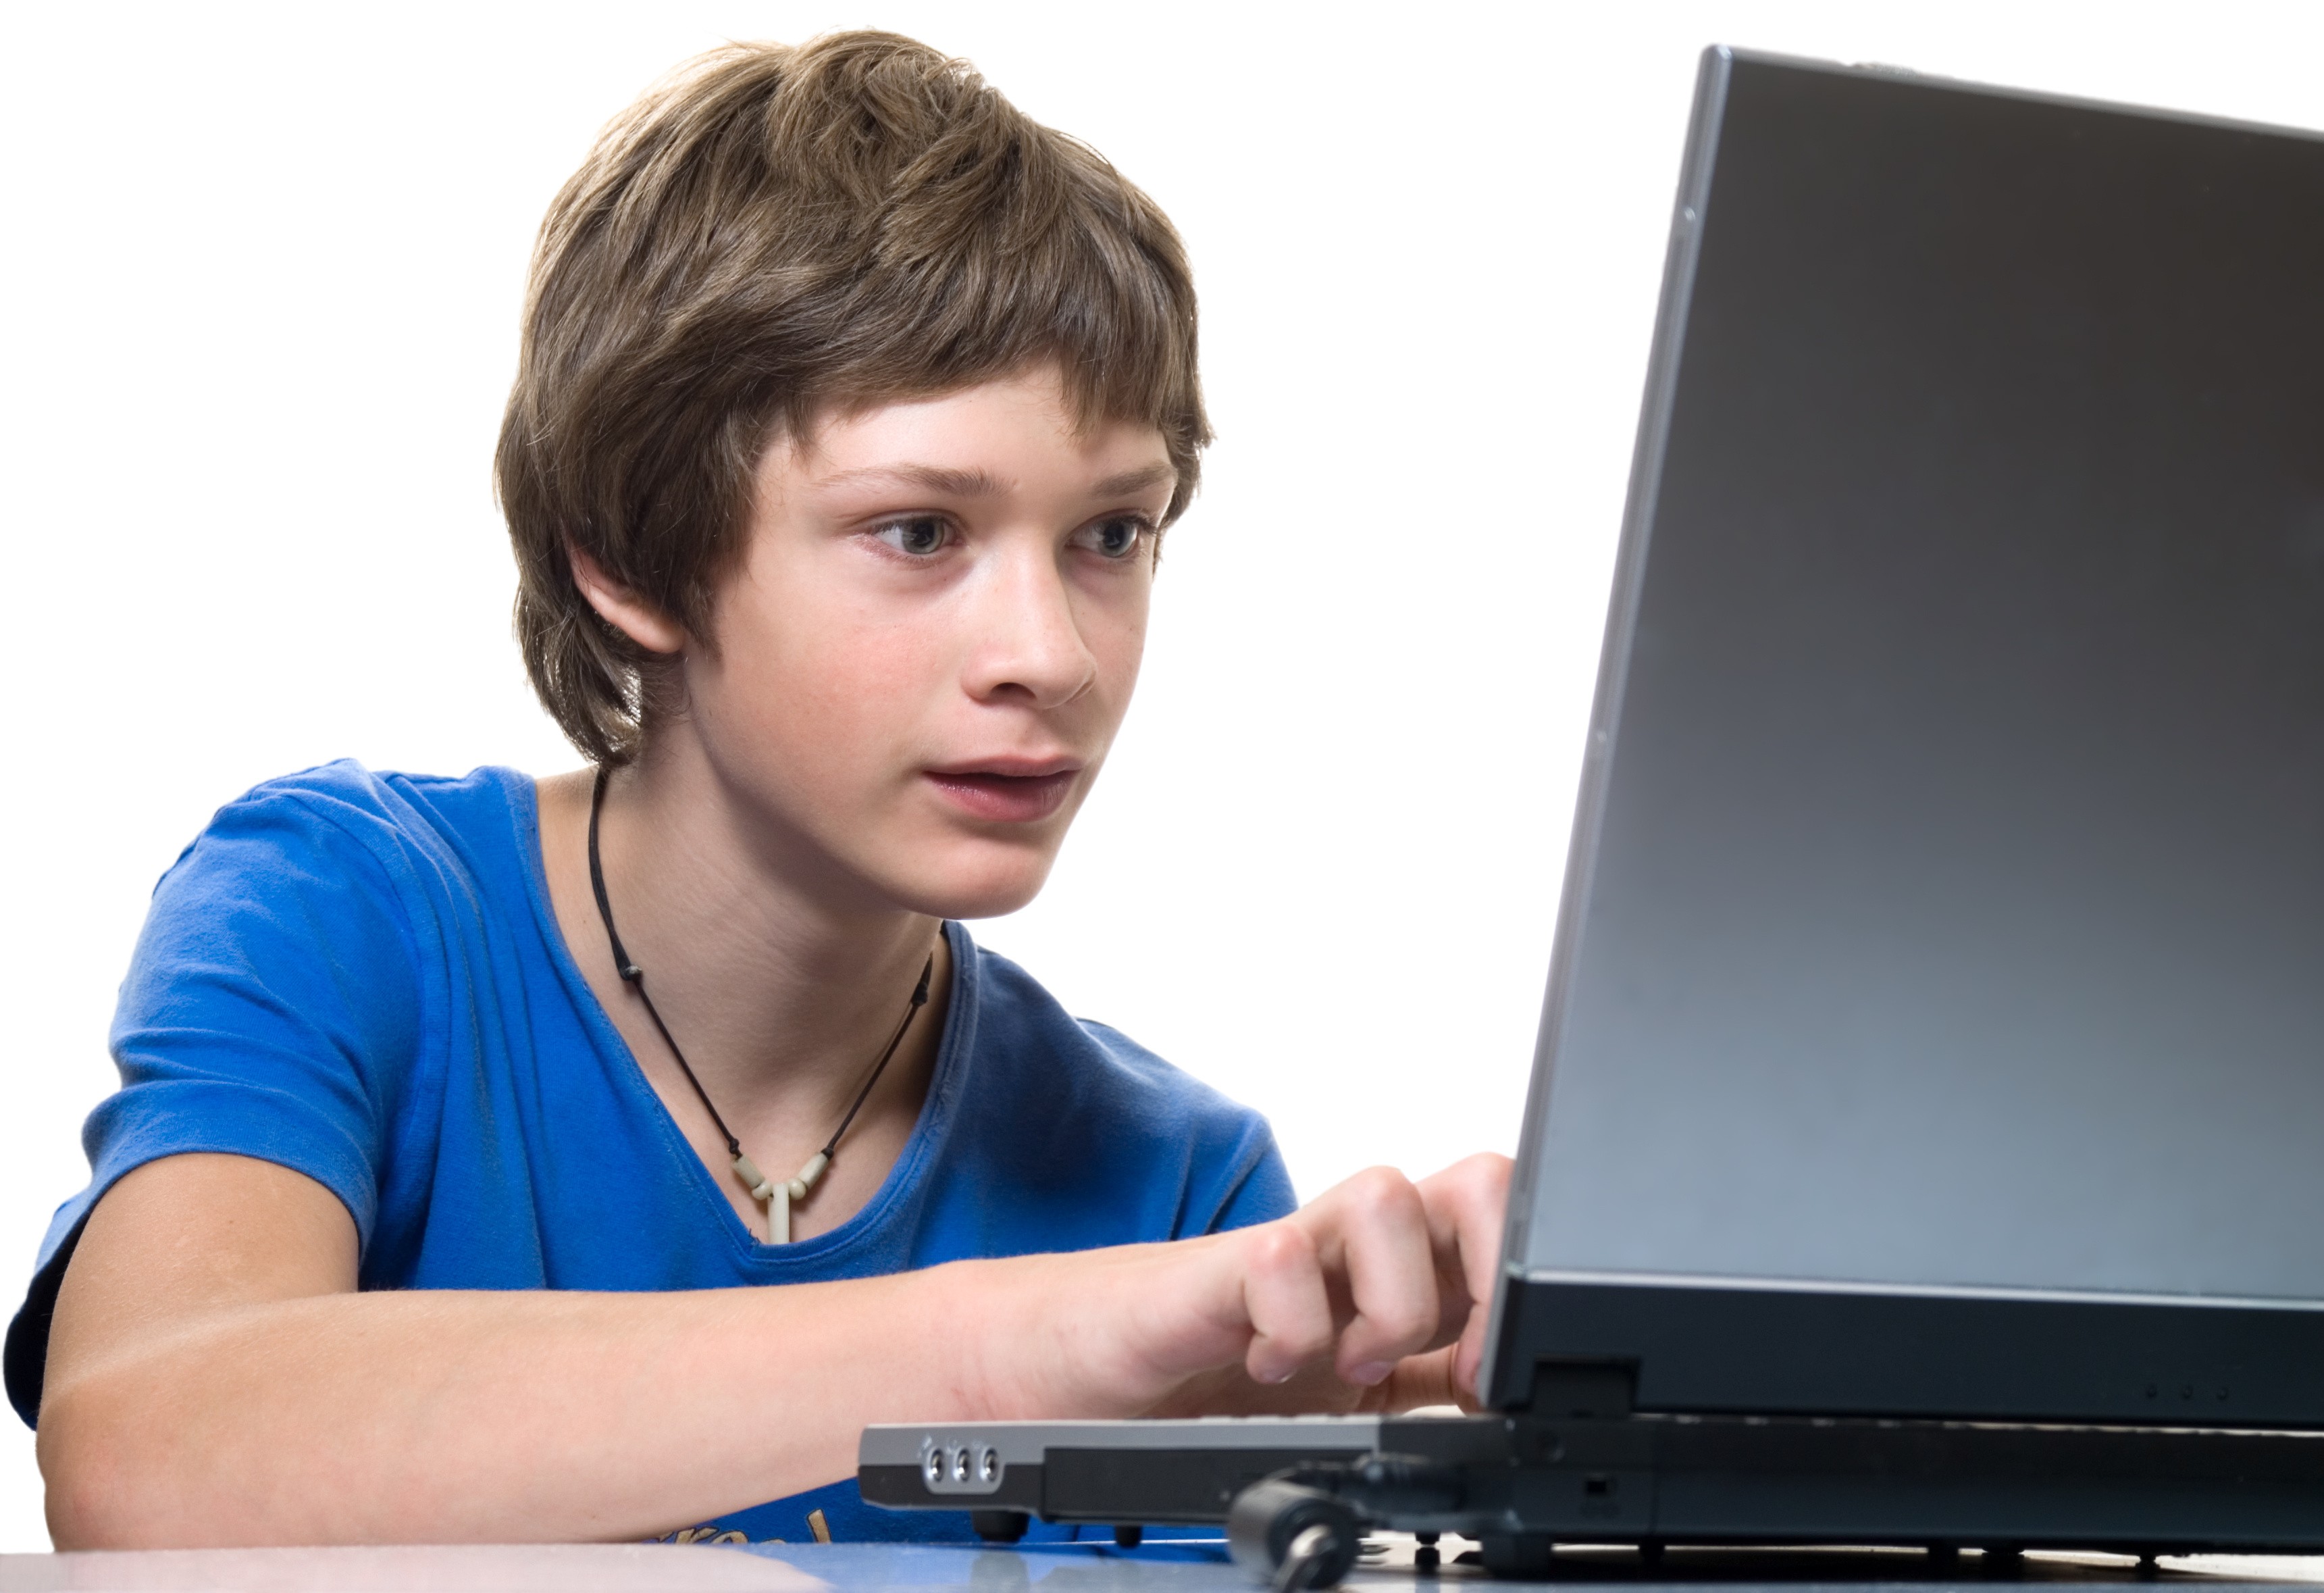 Фрилансер подросток. Ребенок за компом. Ребенок за компьютером. Подросток за компом. Подросток и компьютер.